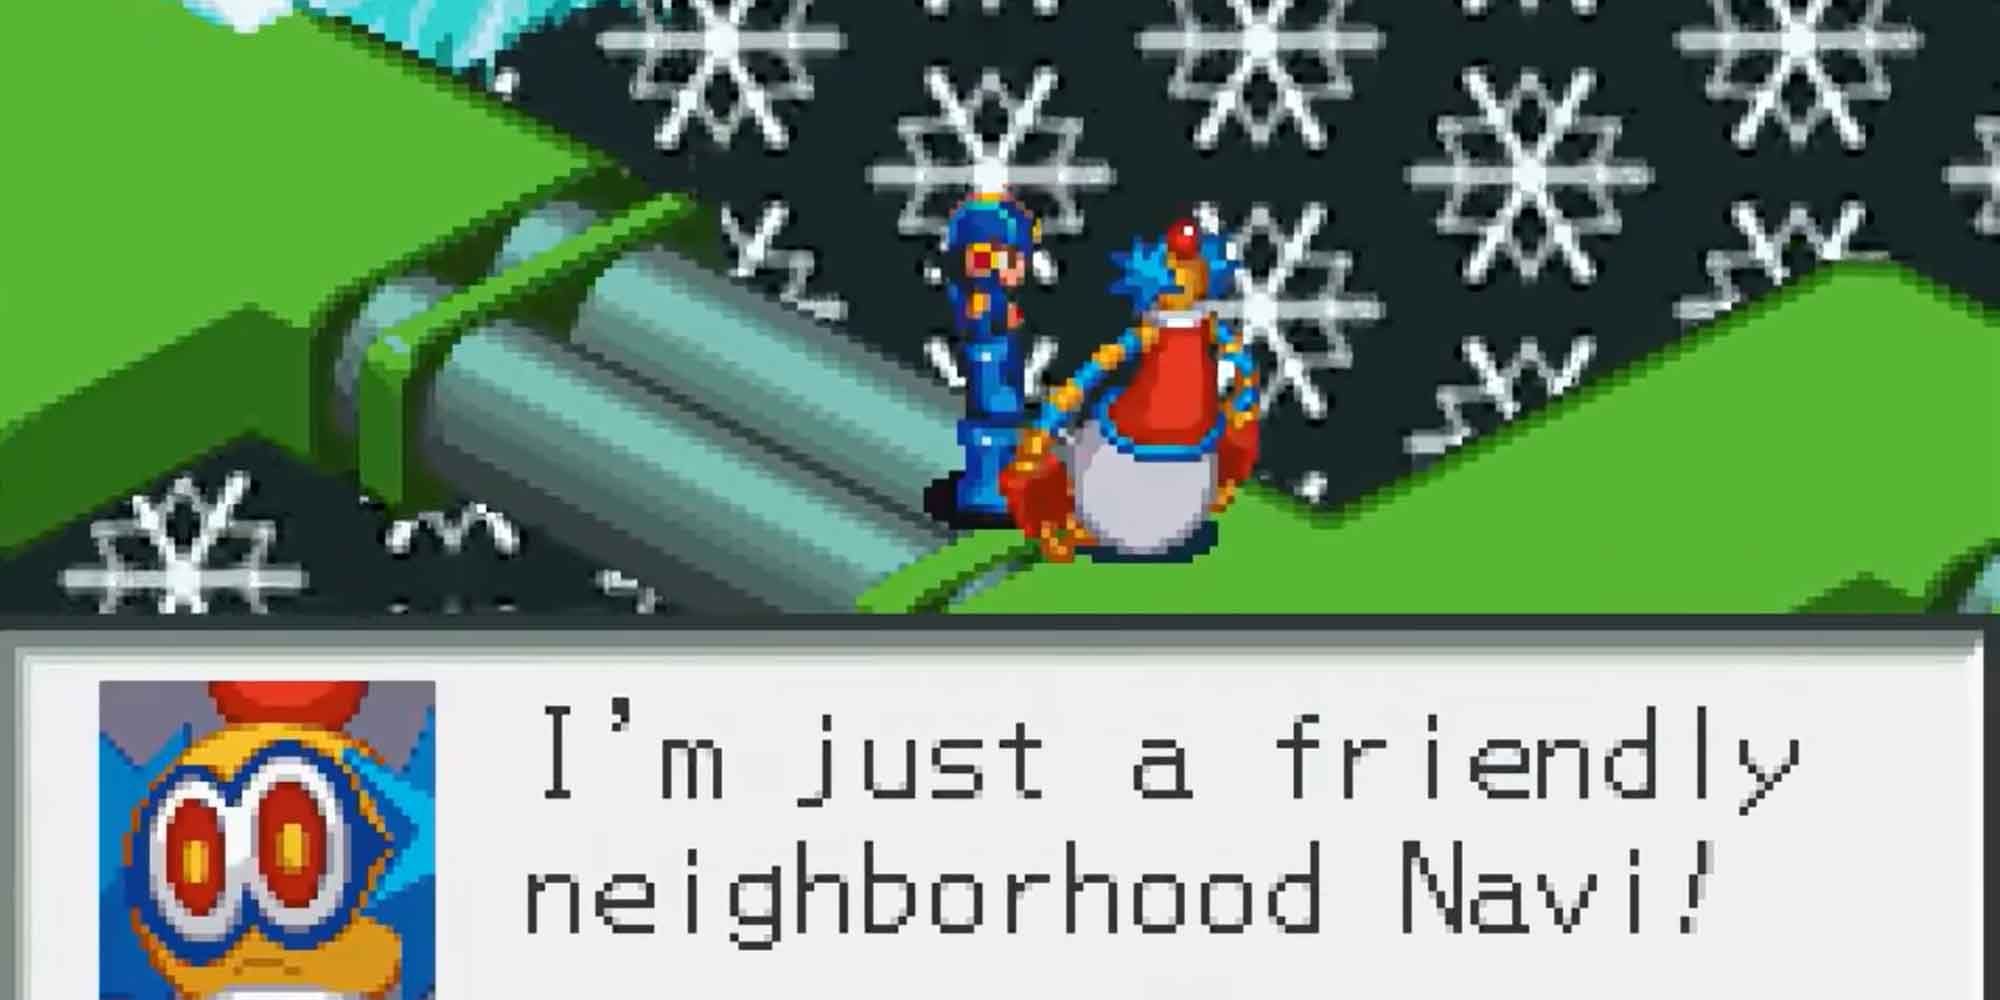 Encountering a Navi in the network in Mega Man Battle Network